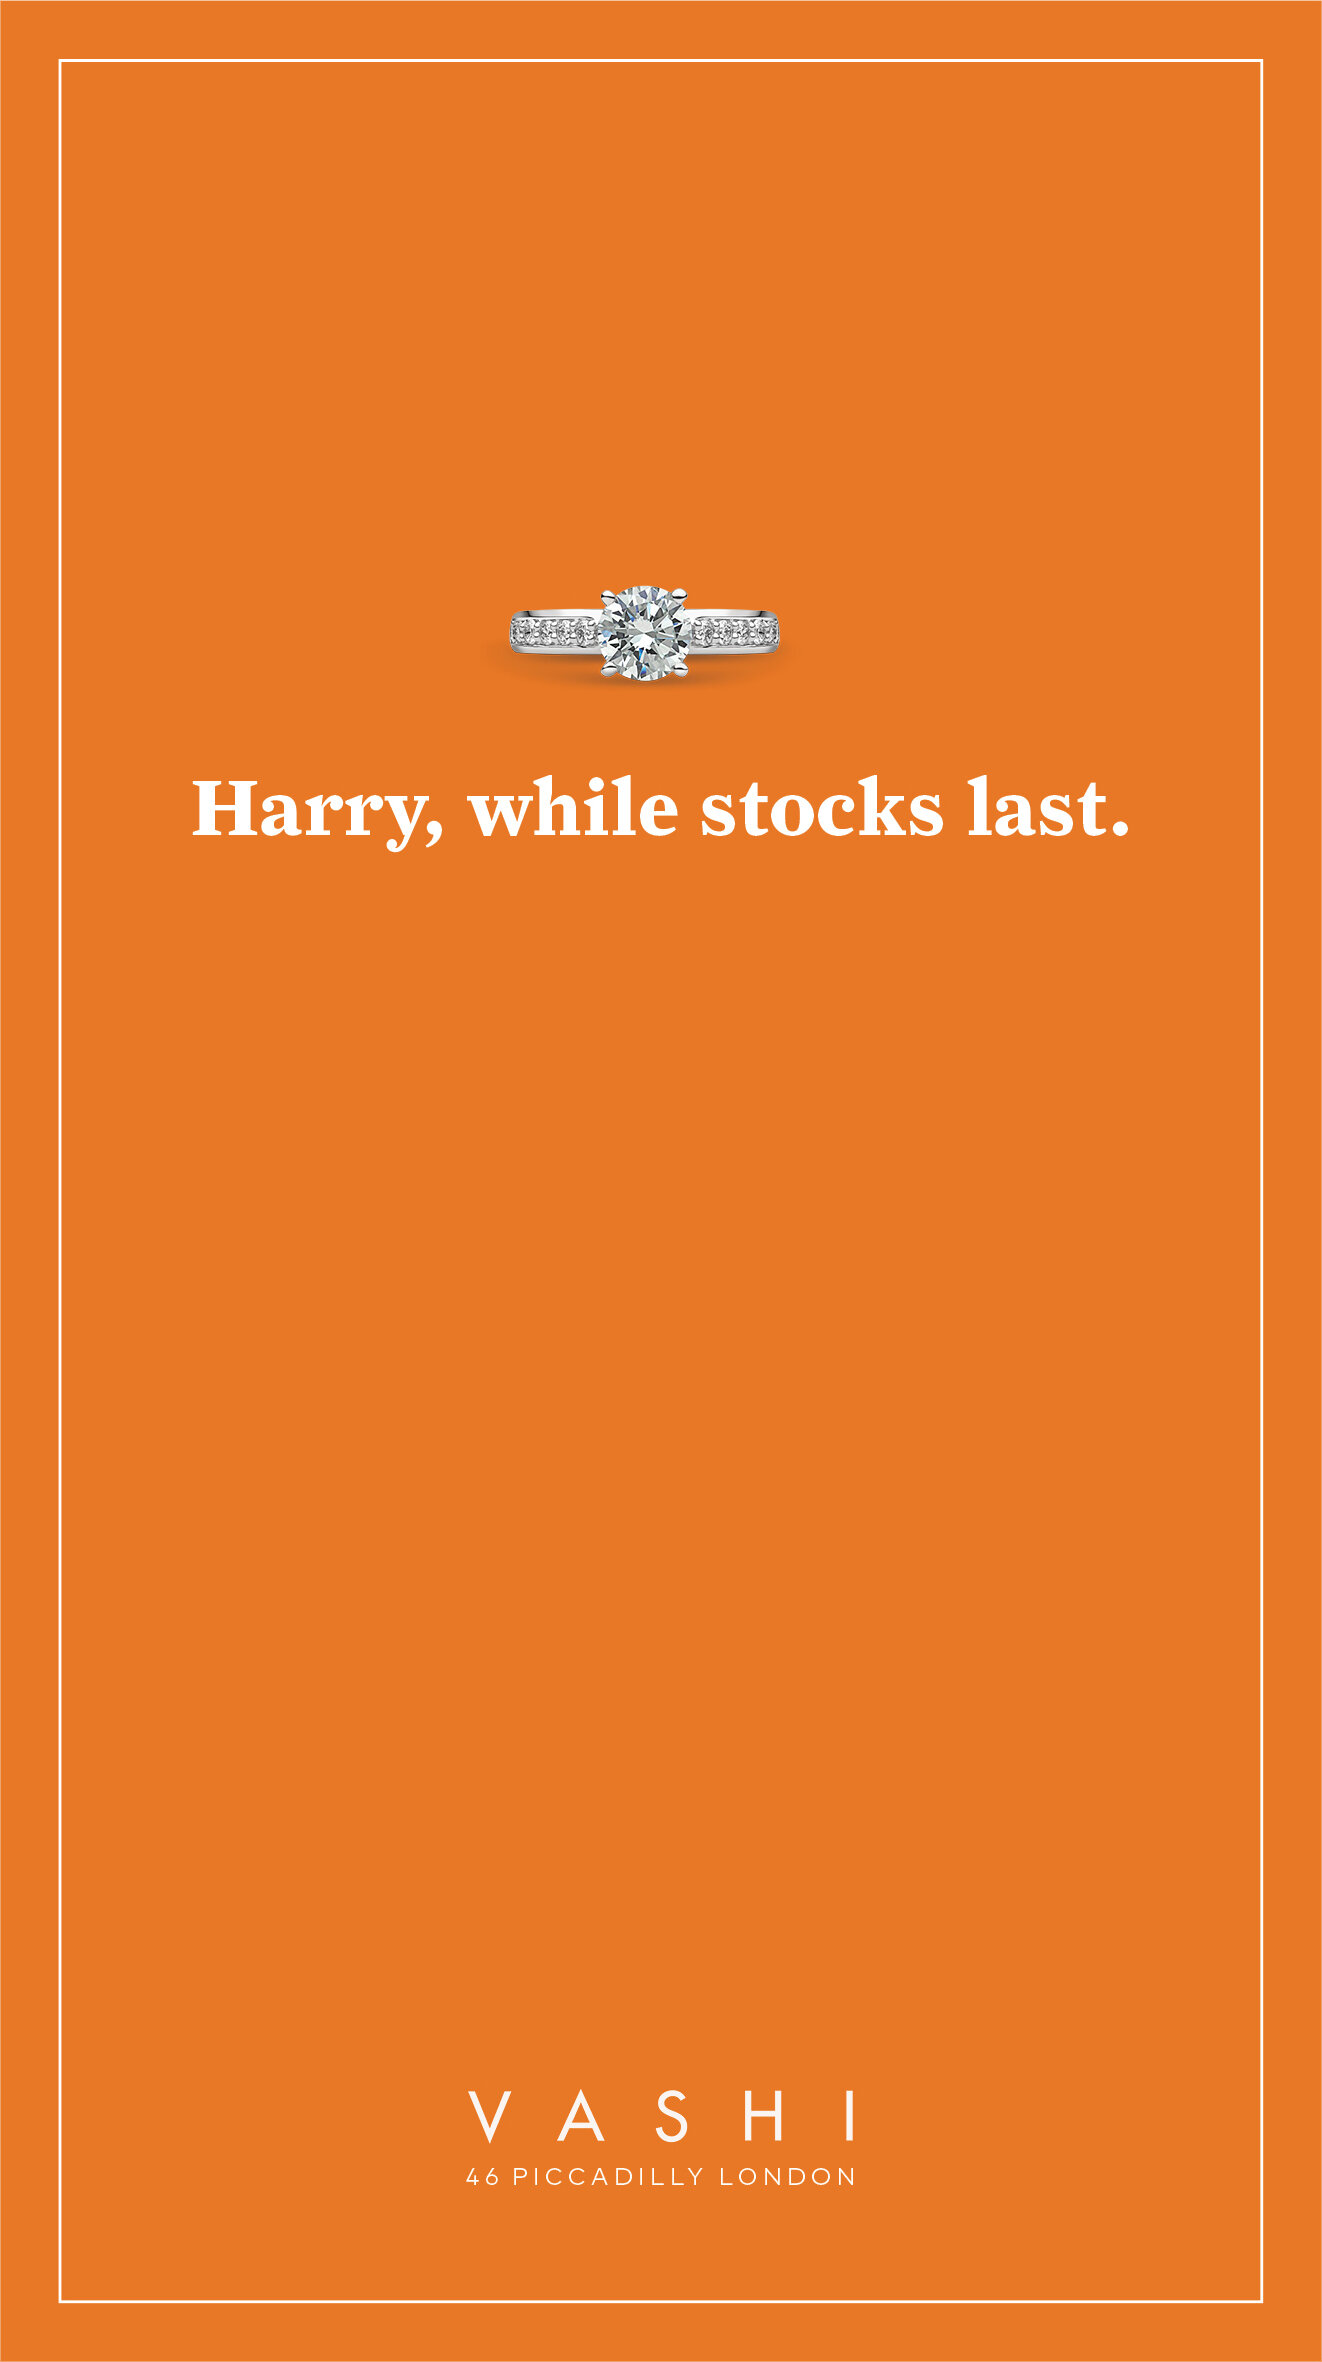 Harry, while stocks.jpg